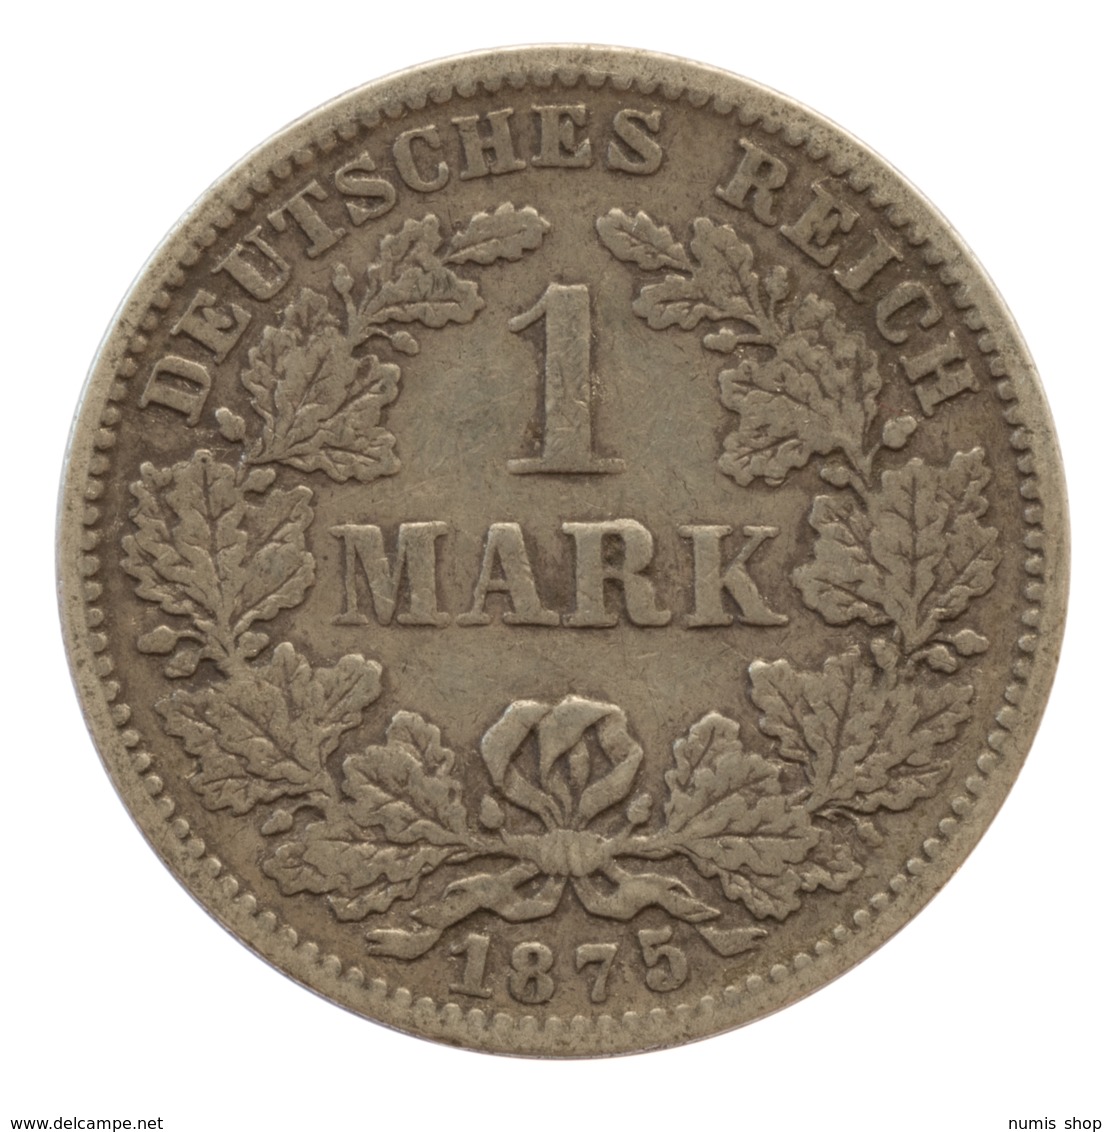 GERMANY - EMPIRE - 1 Mark - 1875 - G - Karlsruhe - Silver - #DE081 - 1 Mark